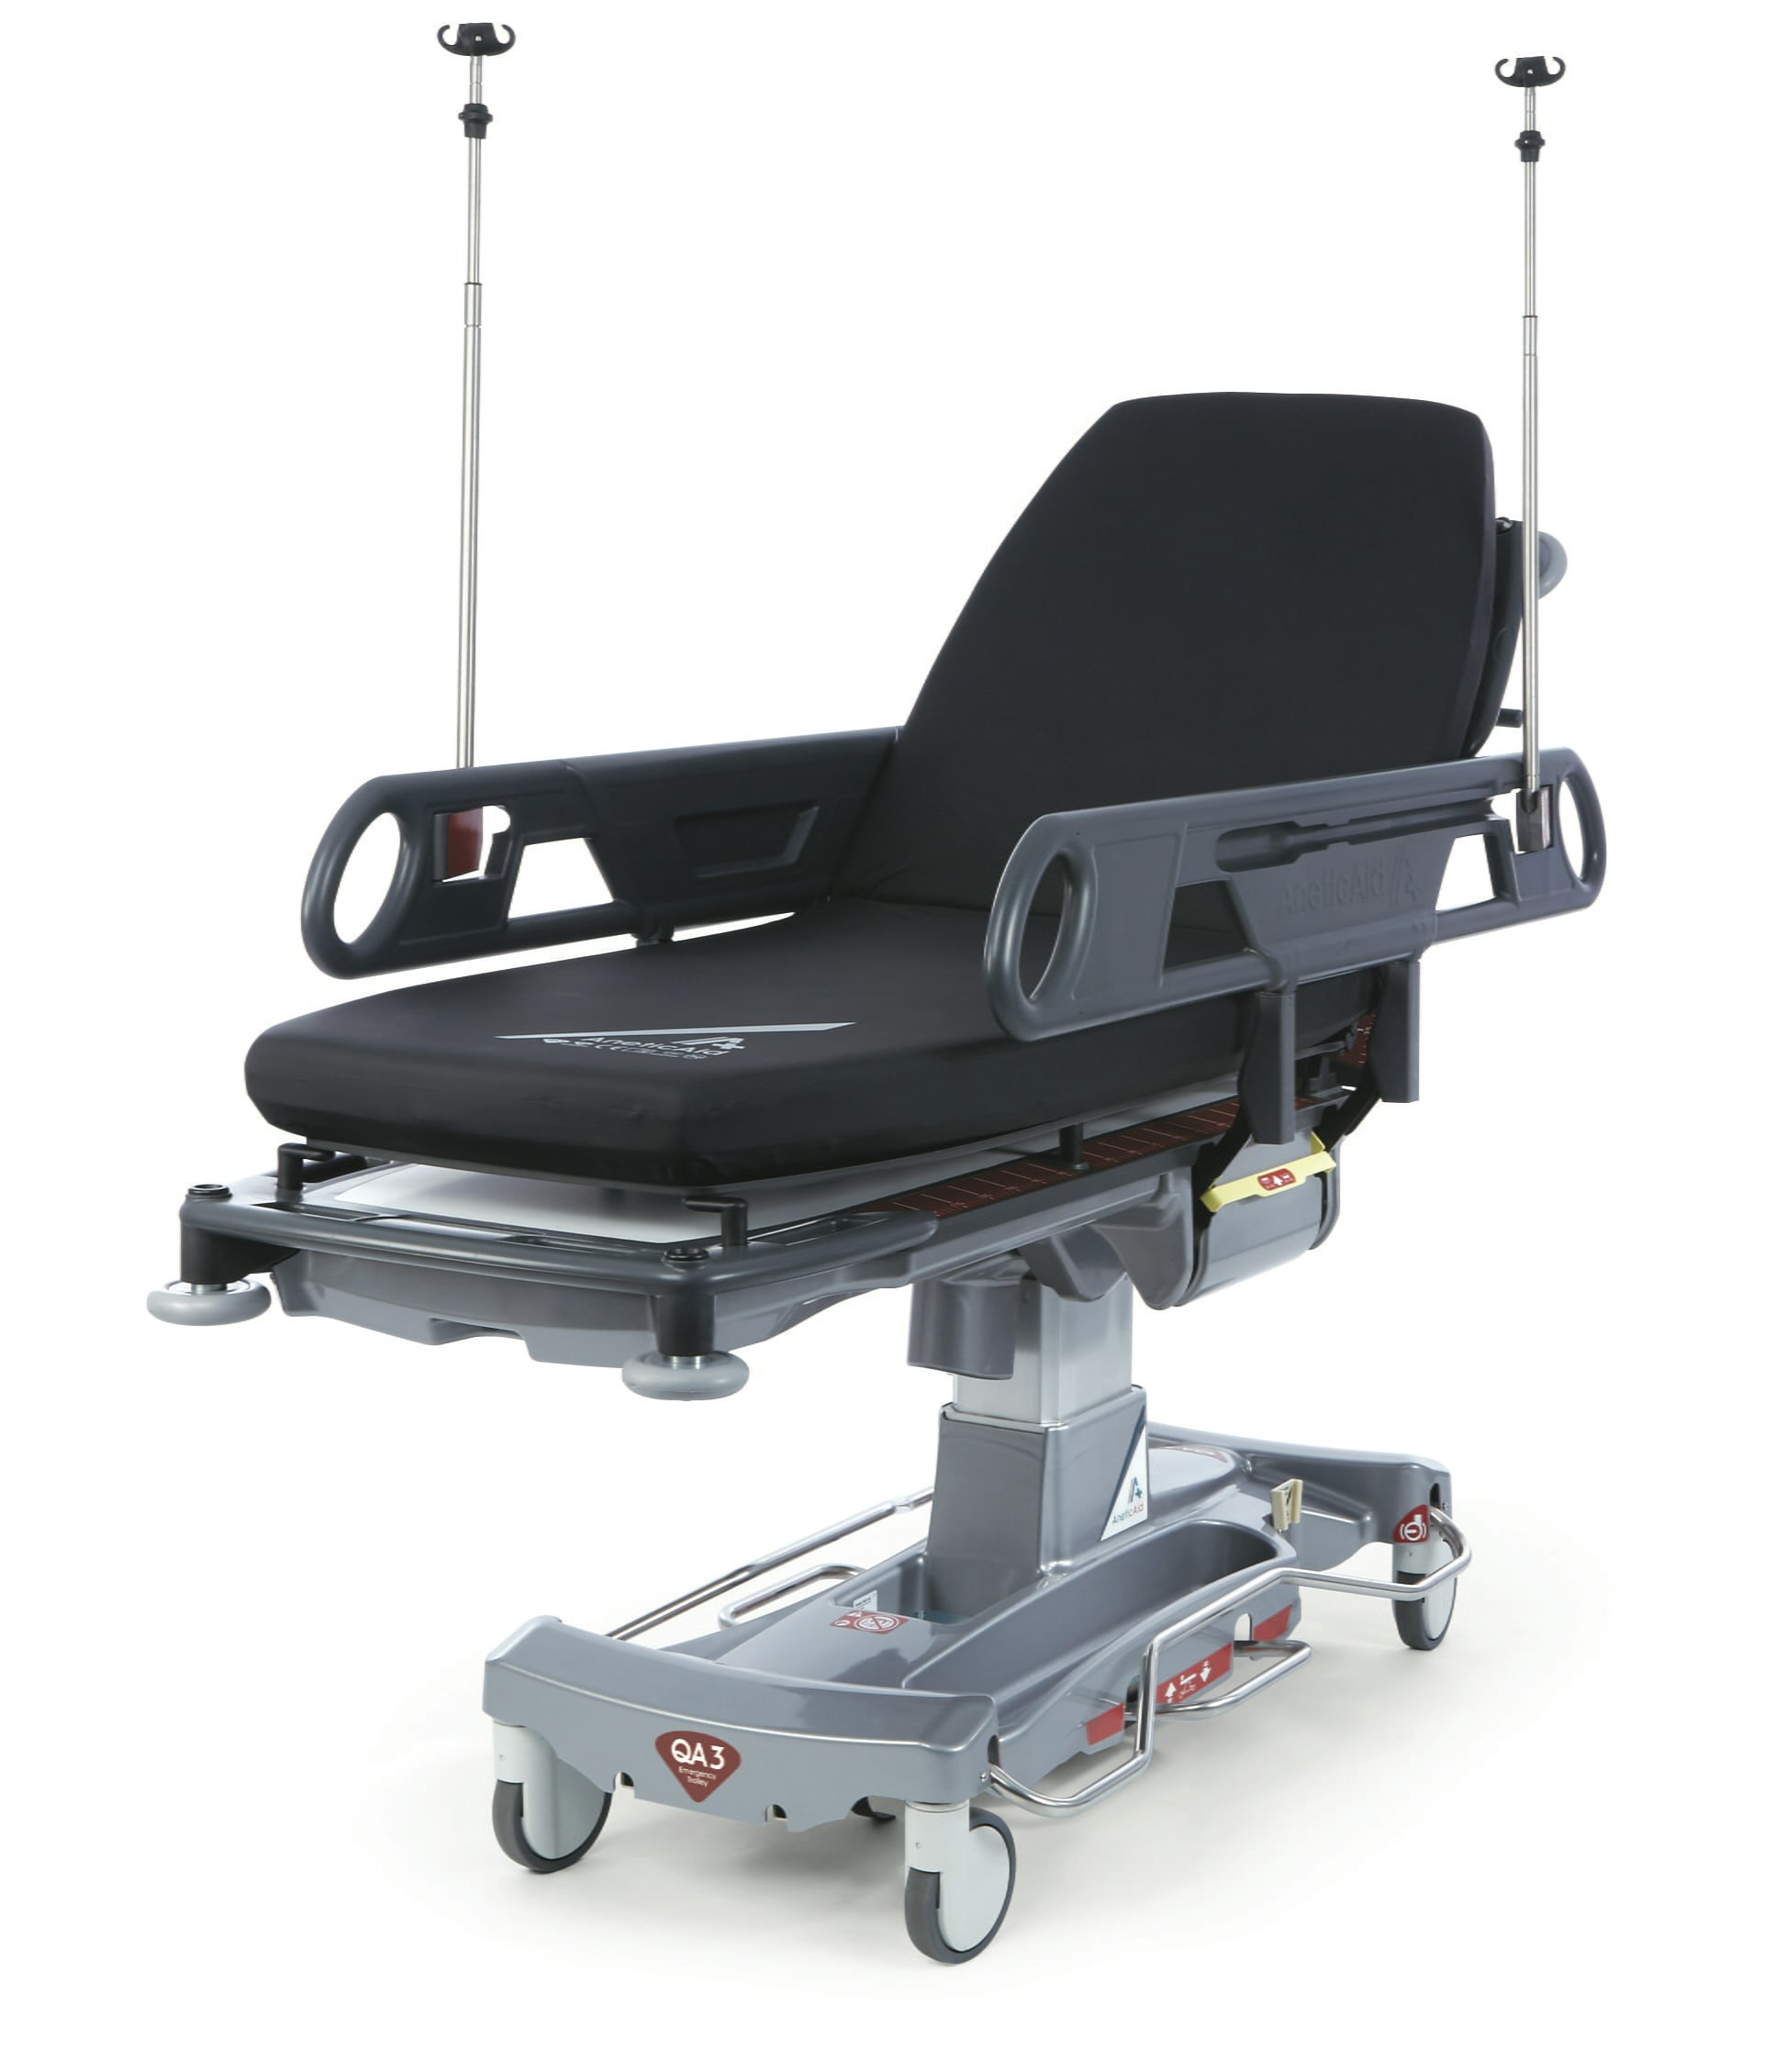 QA3™ Emergency Department Patient Stretcher